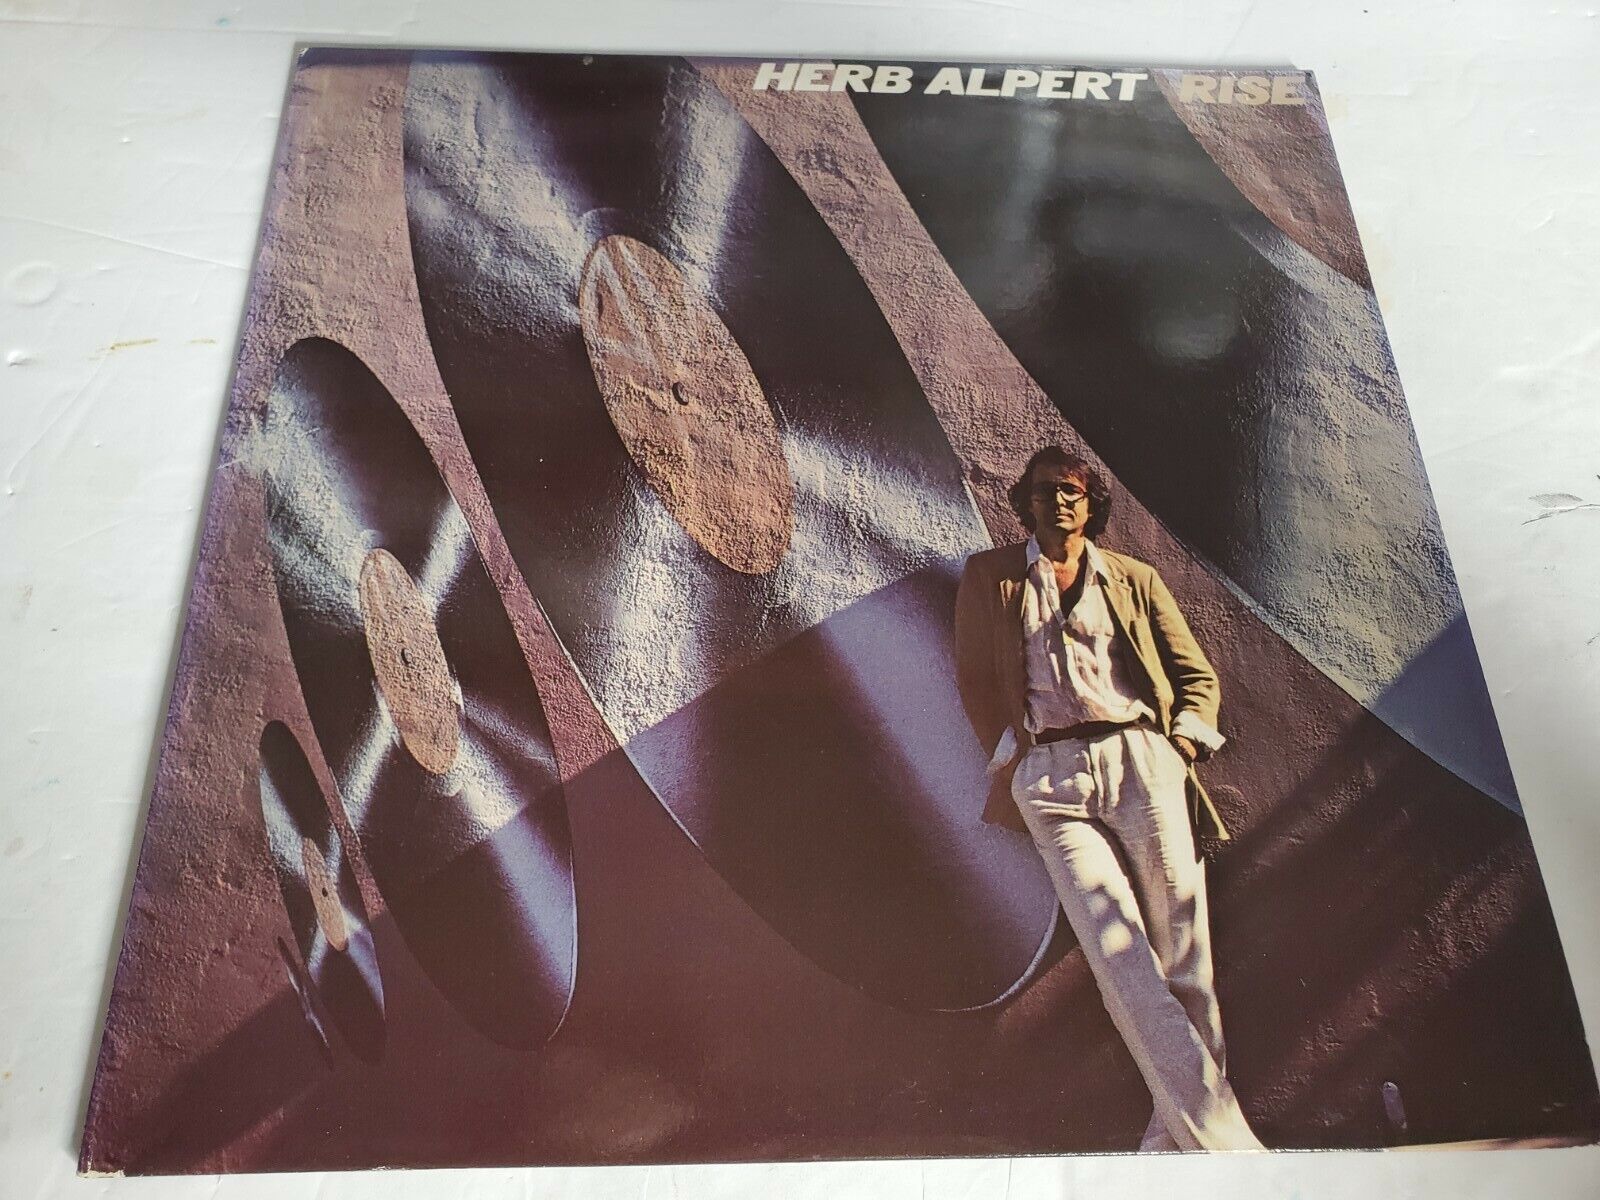 Herb Alpert Rise LP - 1979 A&M SP-4790 1979